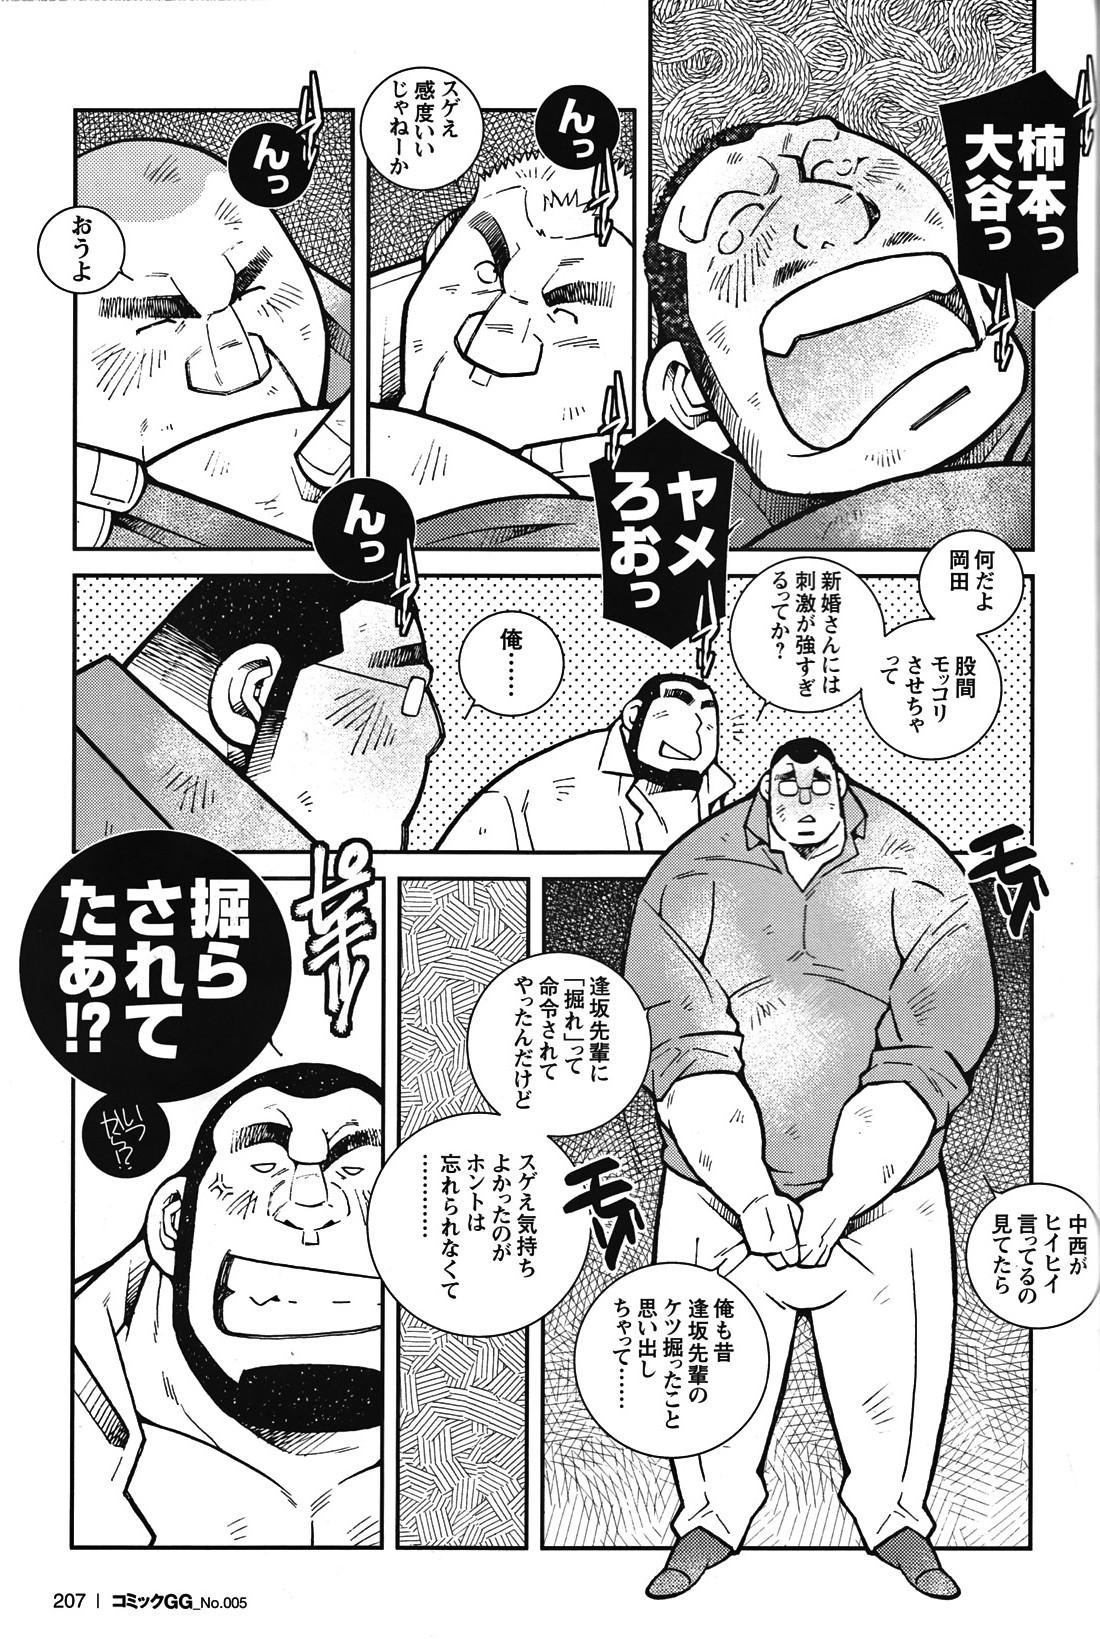 Comic G-men Gaho No.05 189